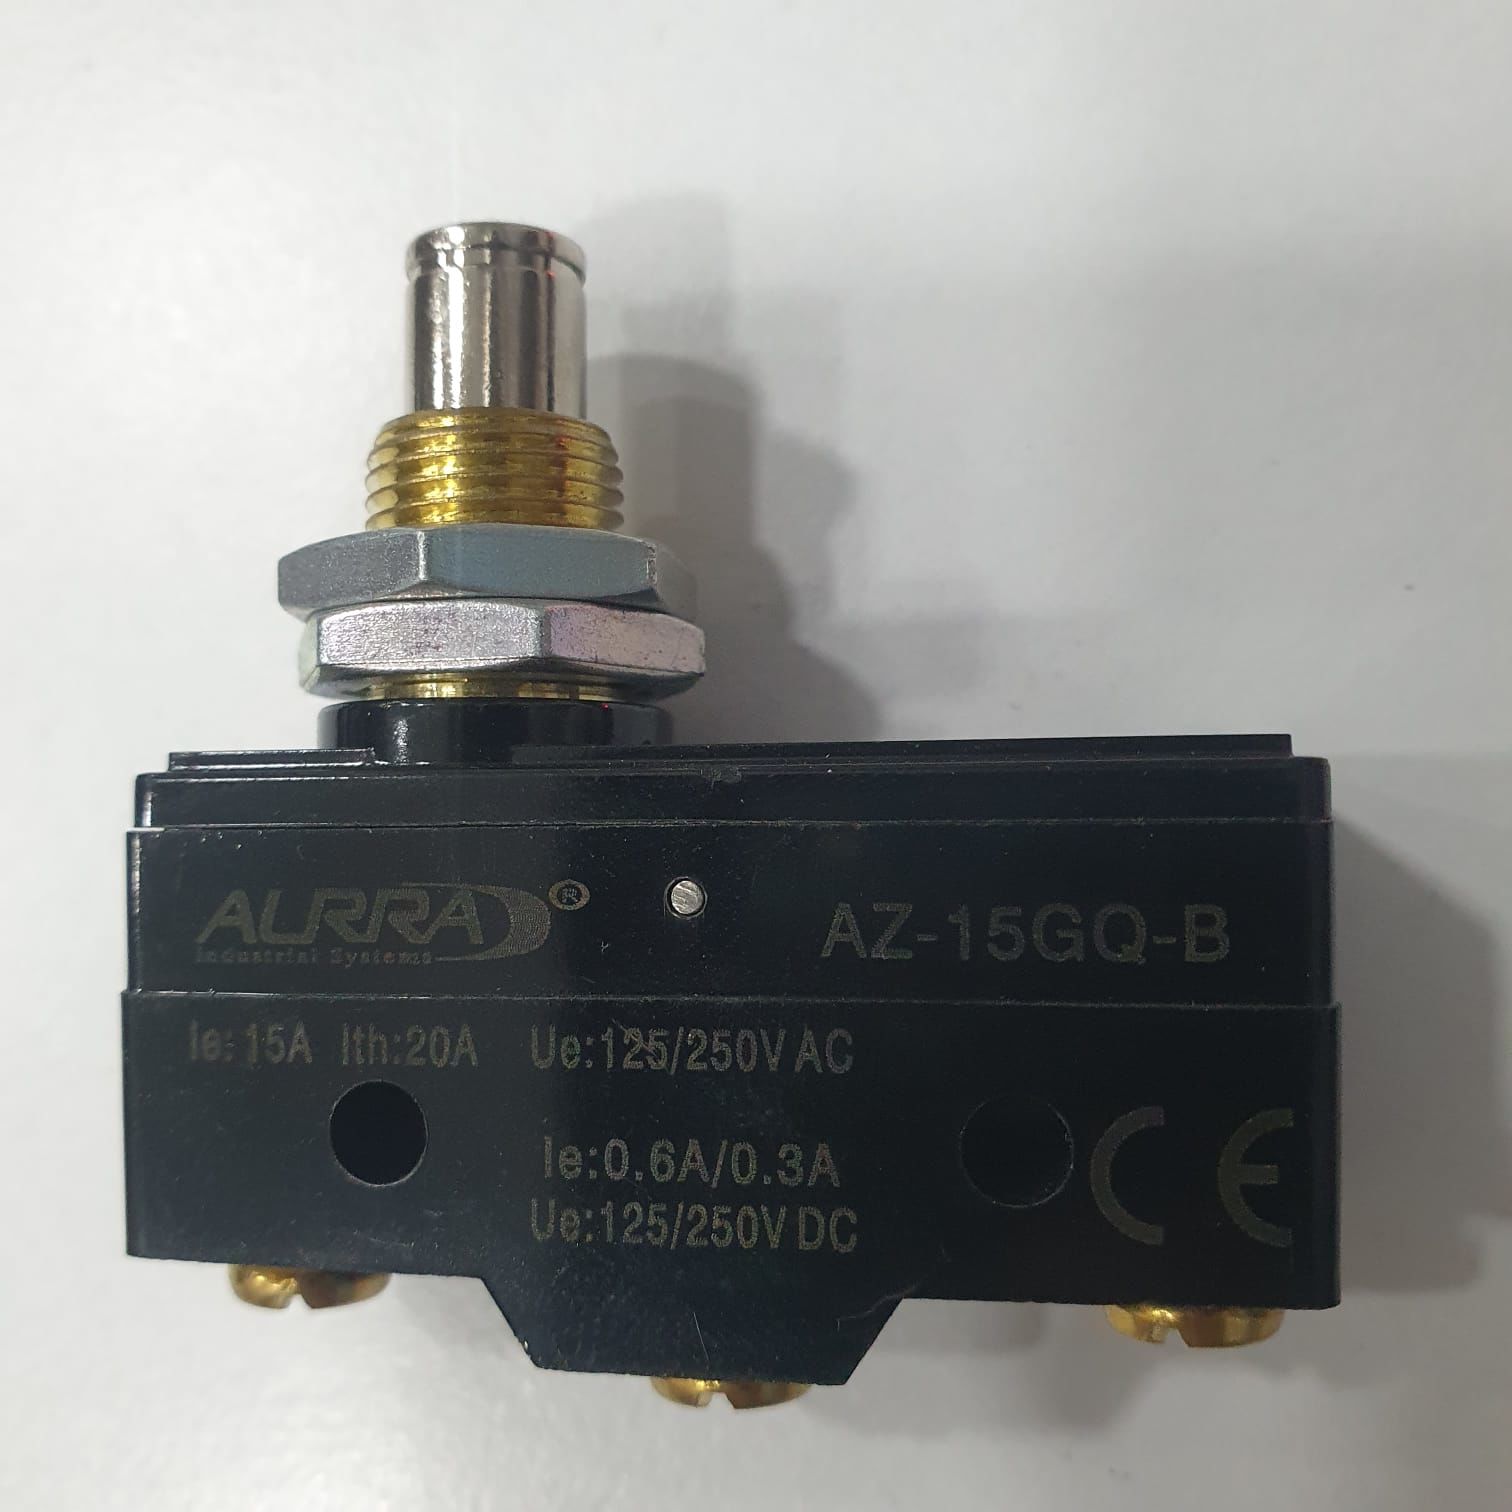 AZ-15GQ-B Mikro Switch